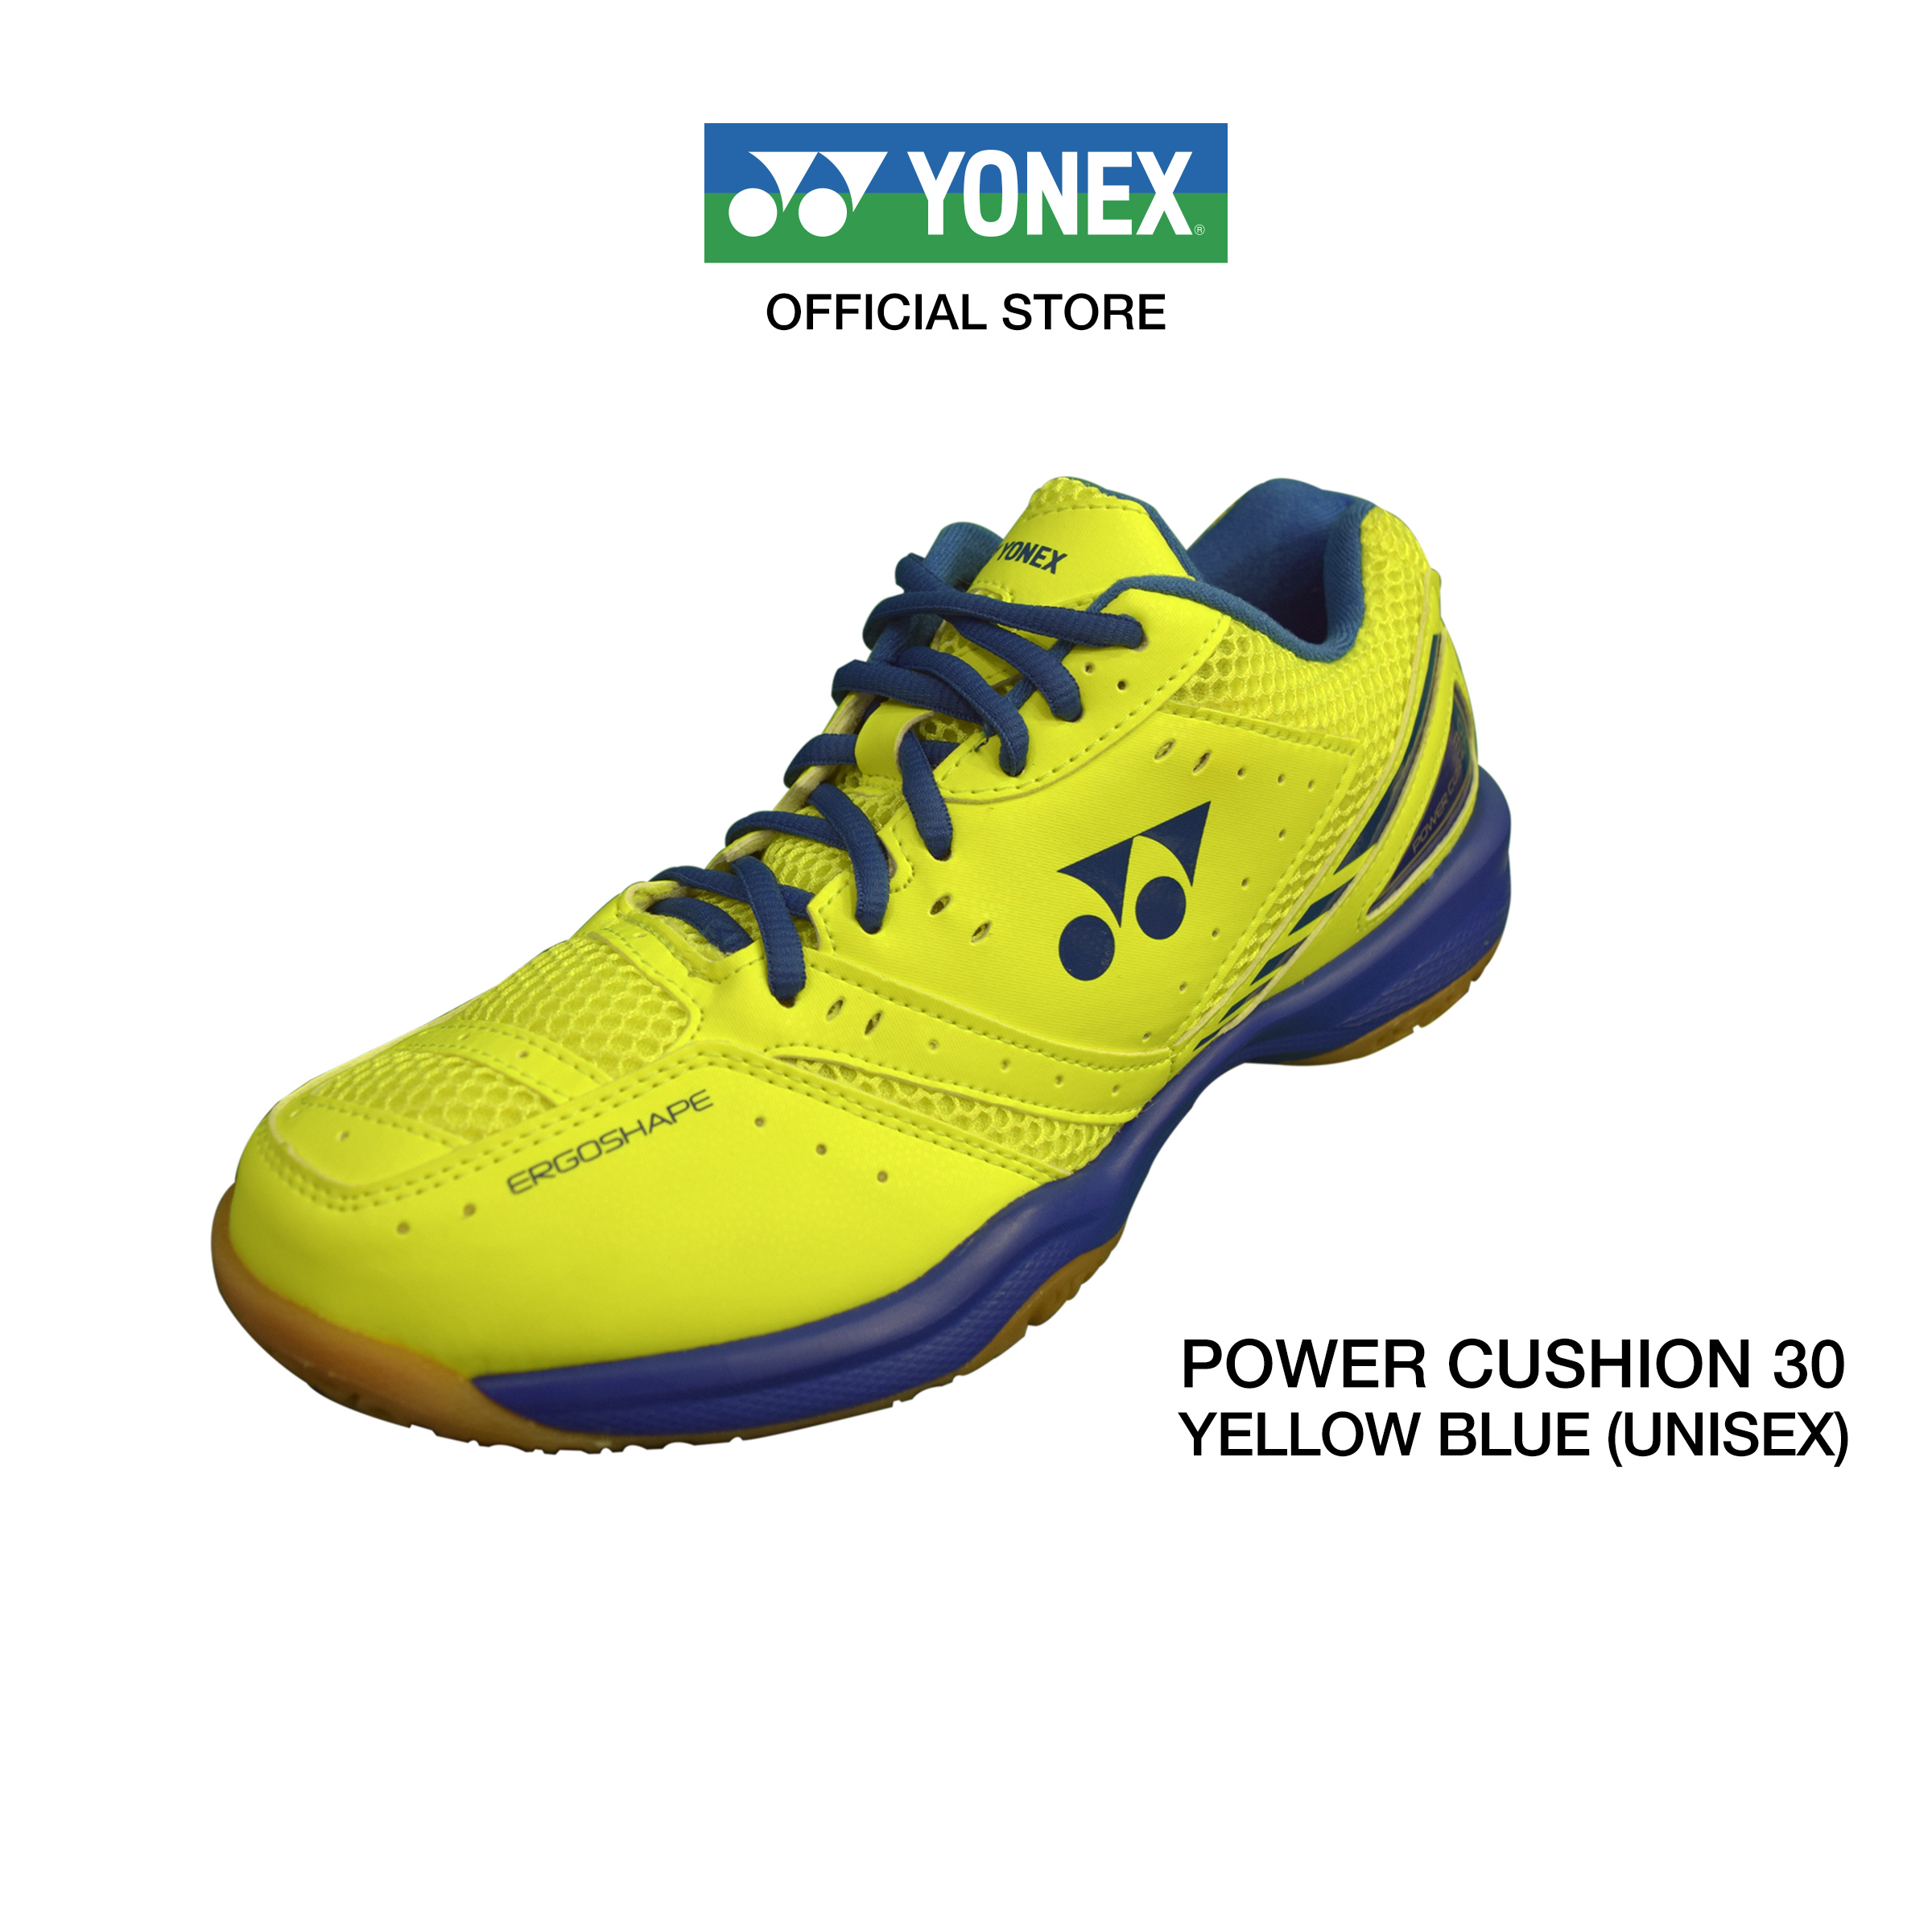 (SIZE US MEN) รองเท้าแบดมินตัน YONEX รุ่น POWER CUSHION 30  (SHB30) รองเท้าสำหรับผู้เริ่มต้นเล่นแบดมินตันที่ต้องการรองเท้าราคาประหยัด